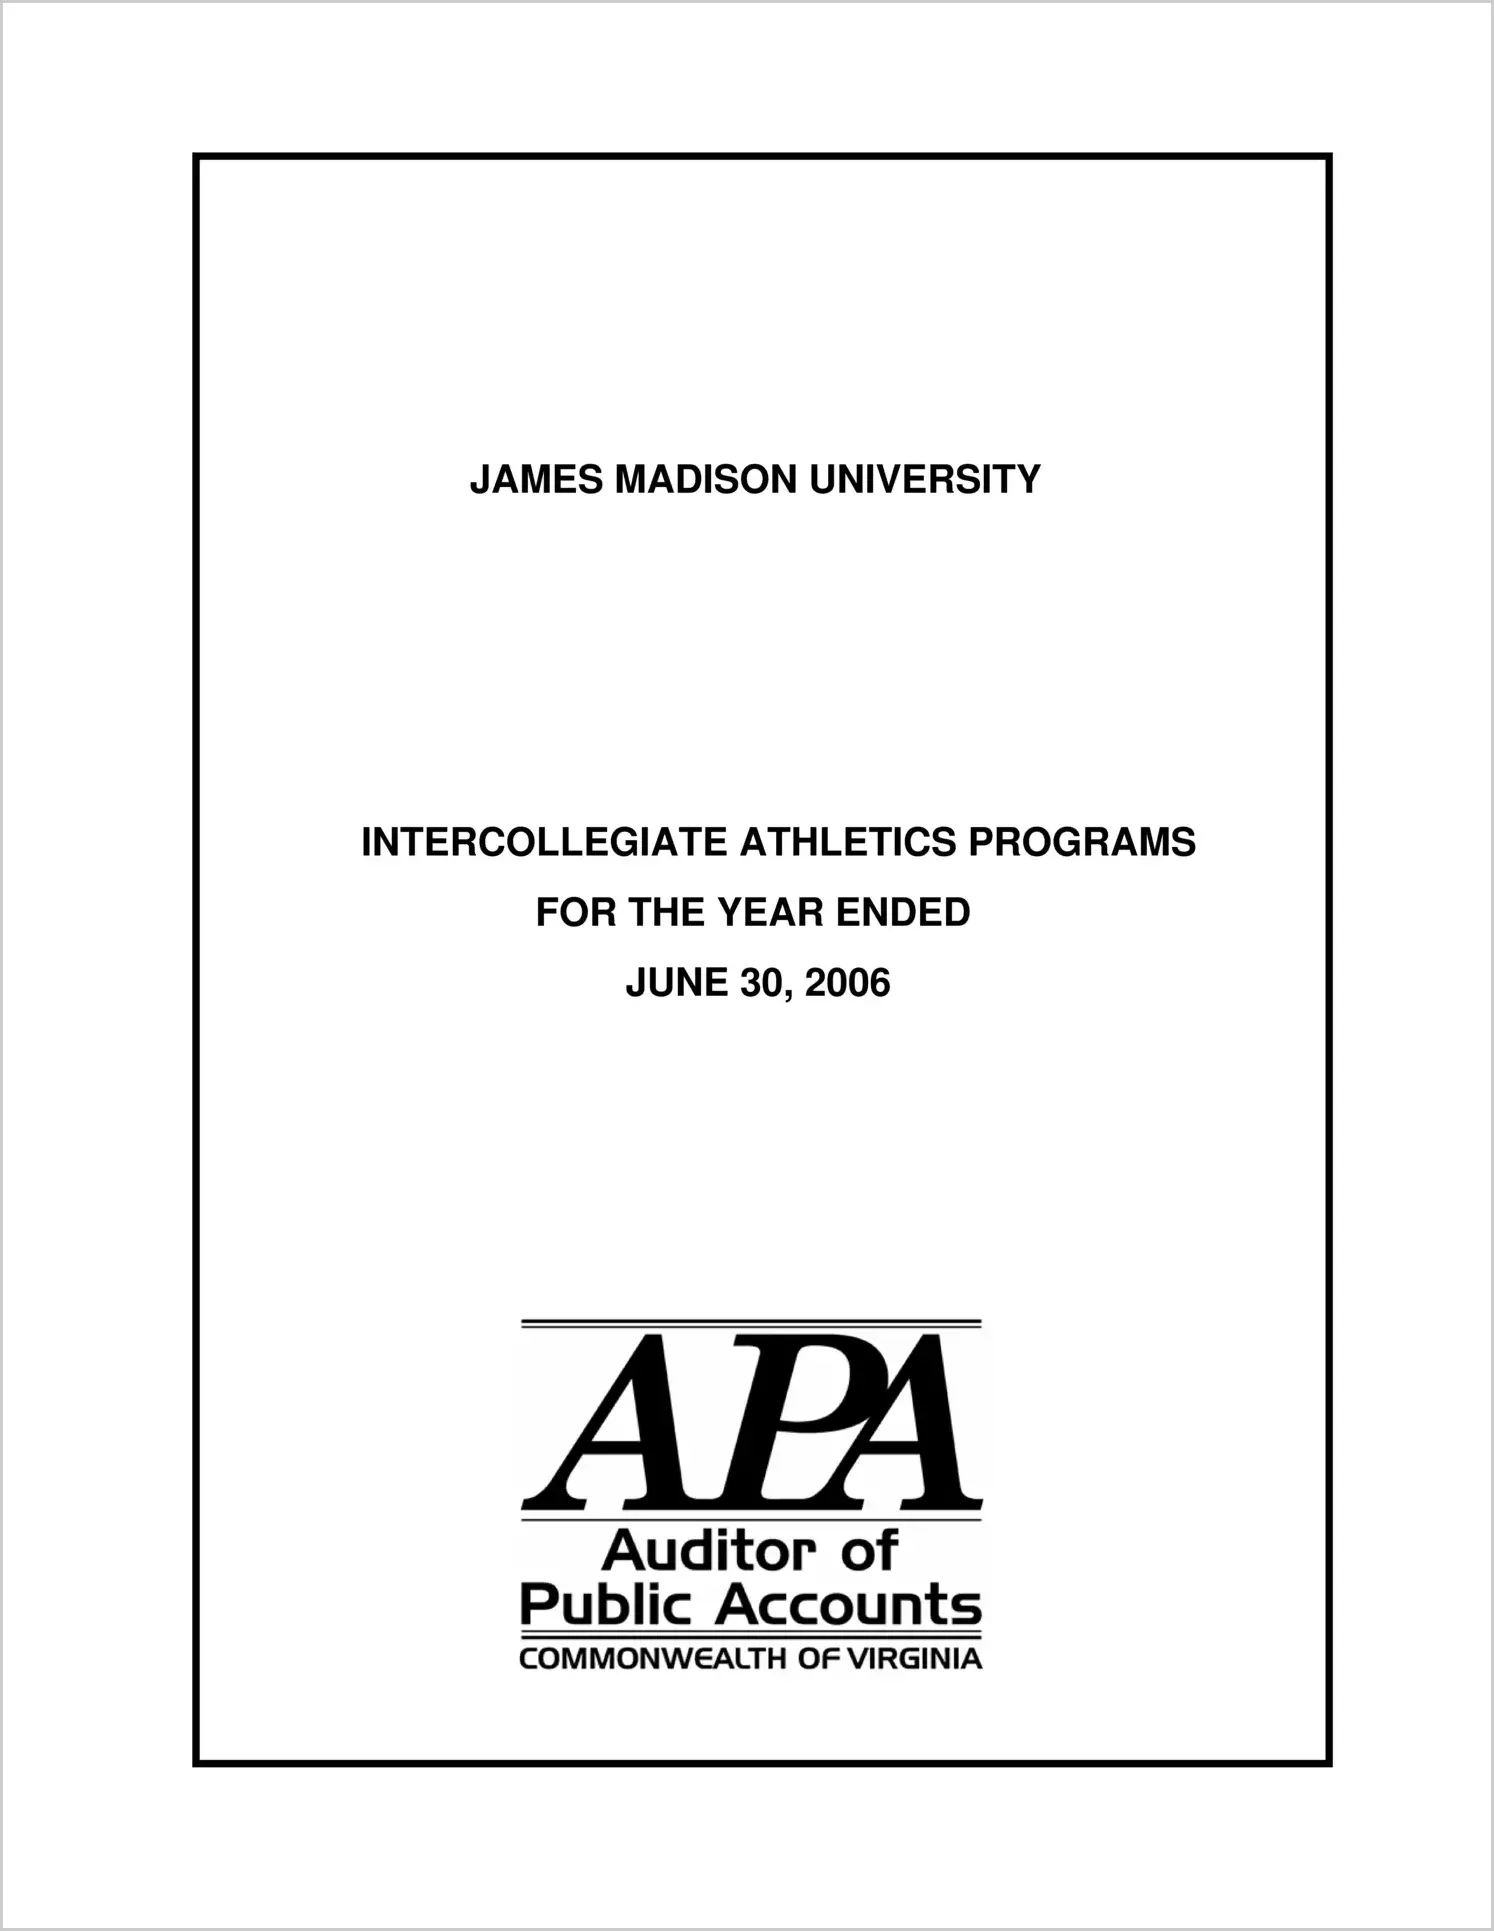 James Madison University Intercollegiate Athletics Programs for the year ended June 30, 2006